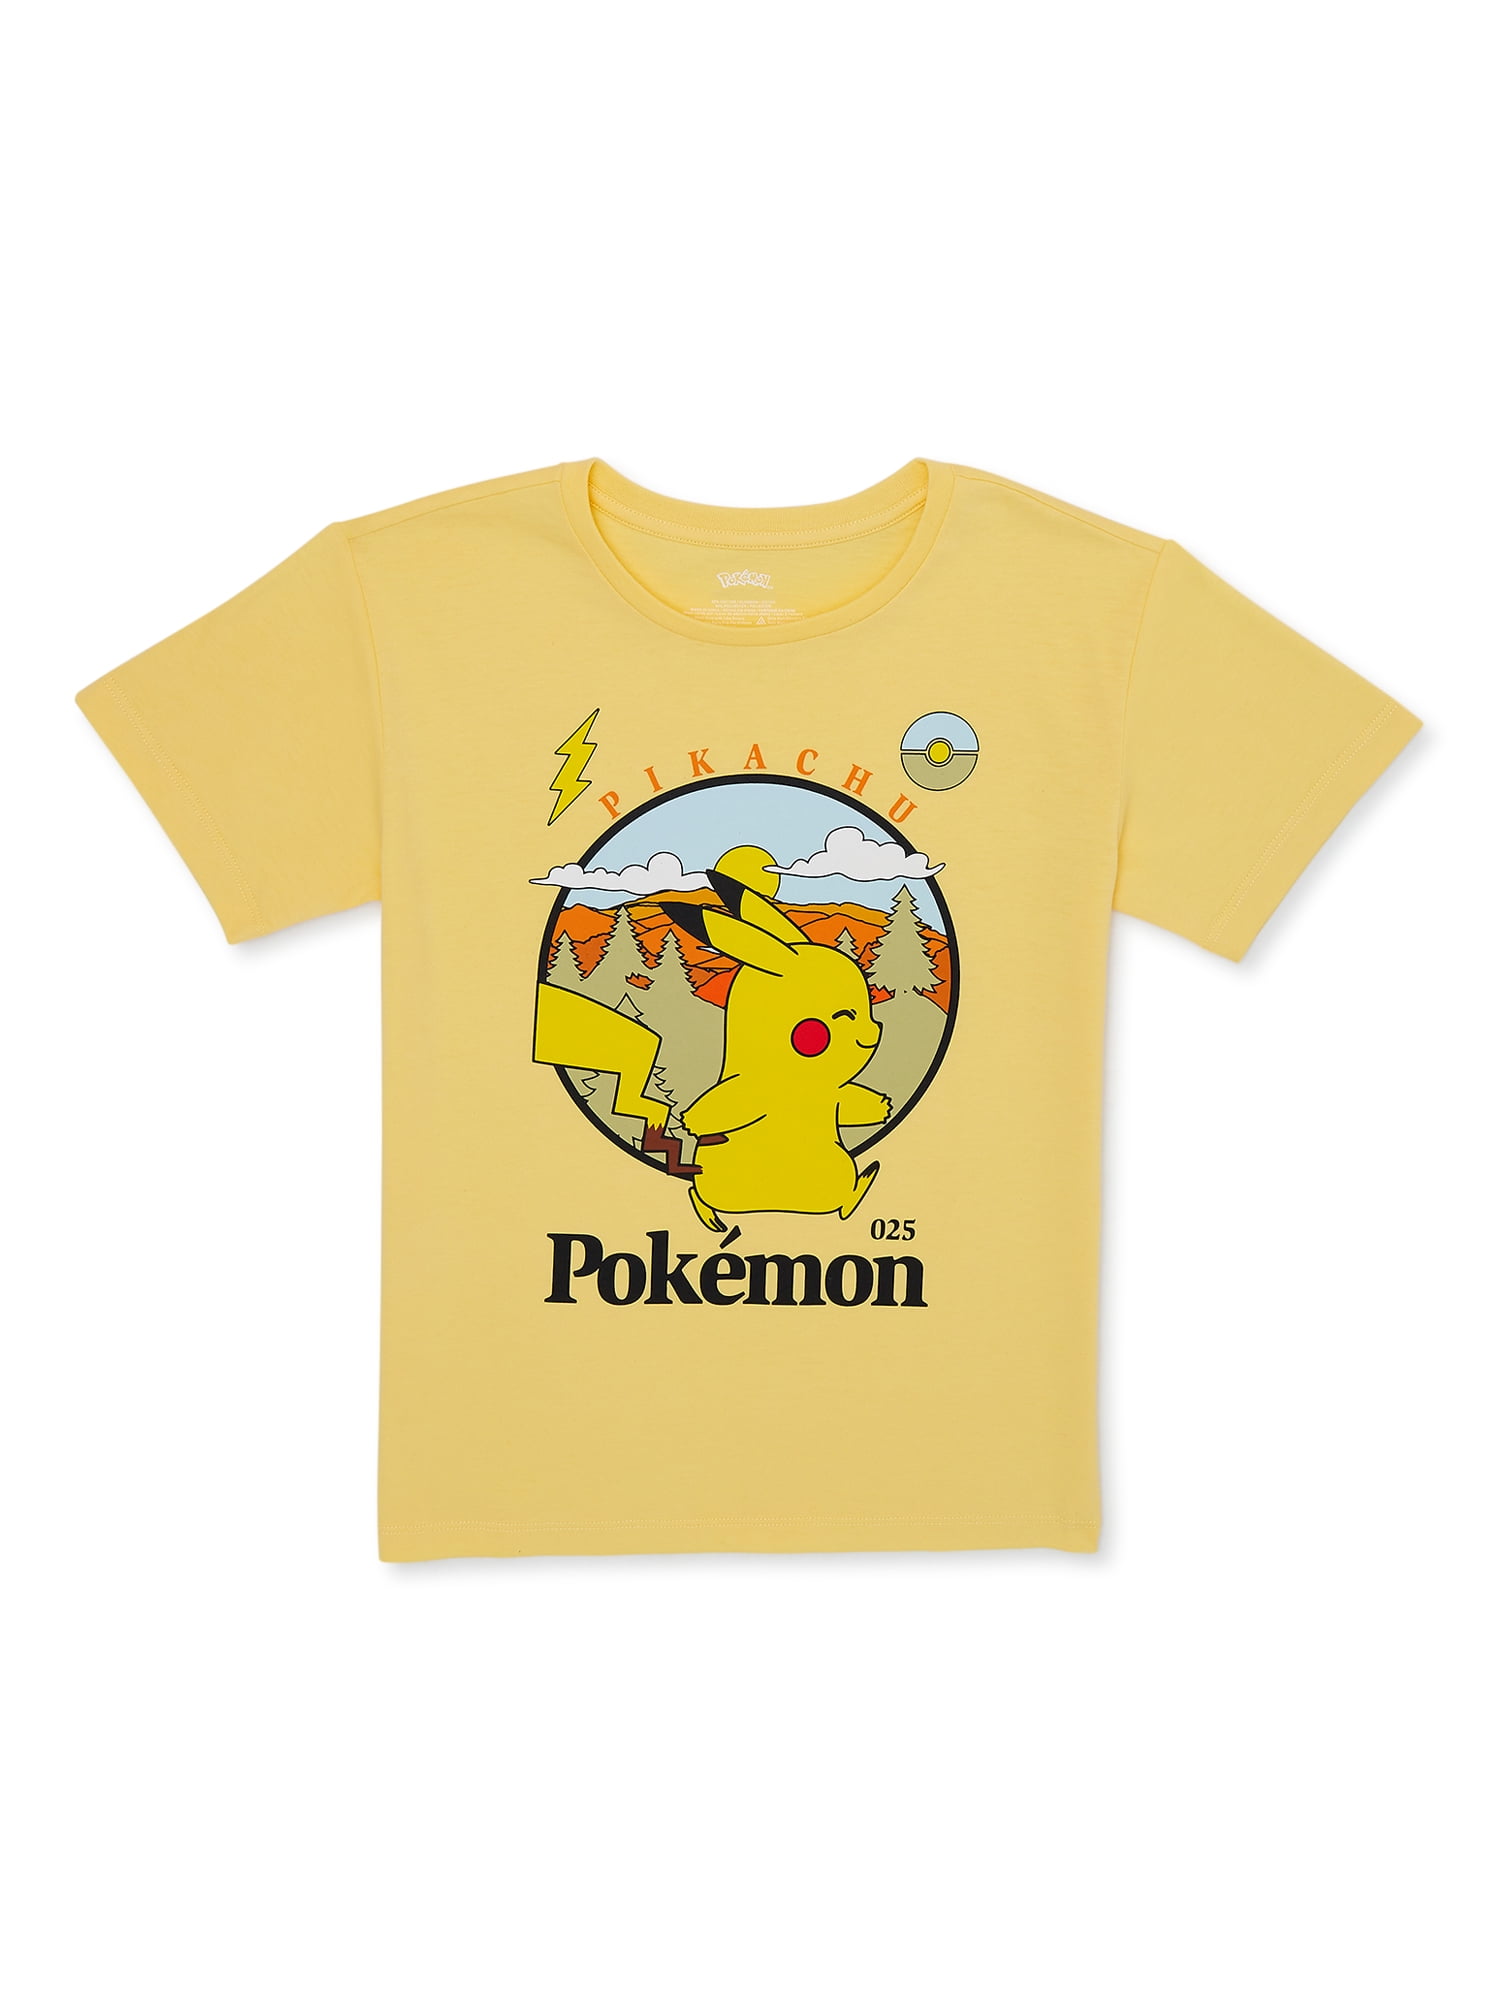 Nintendo Girls Pokemon Pikachu Graphic T-Shirt - Walmart.com